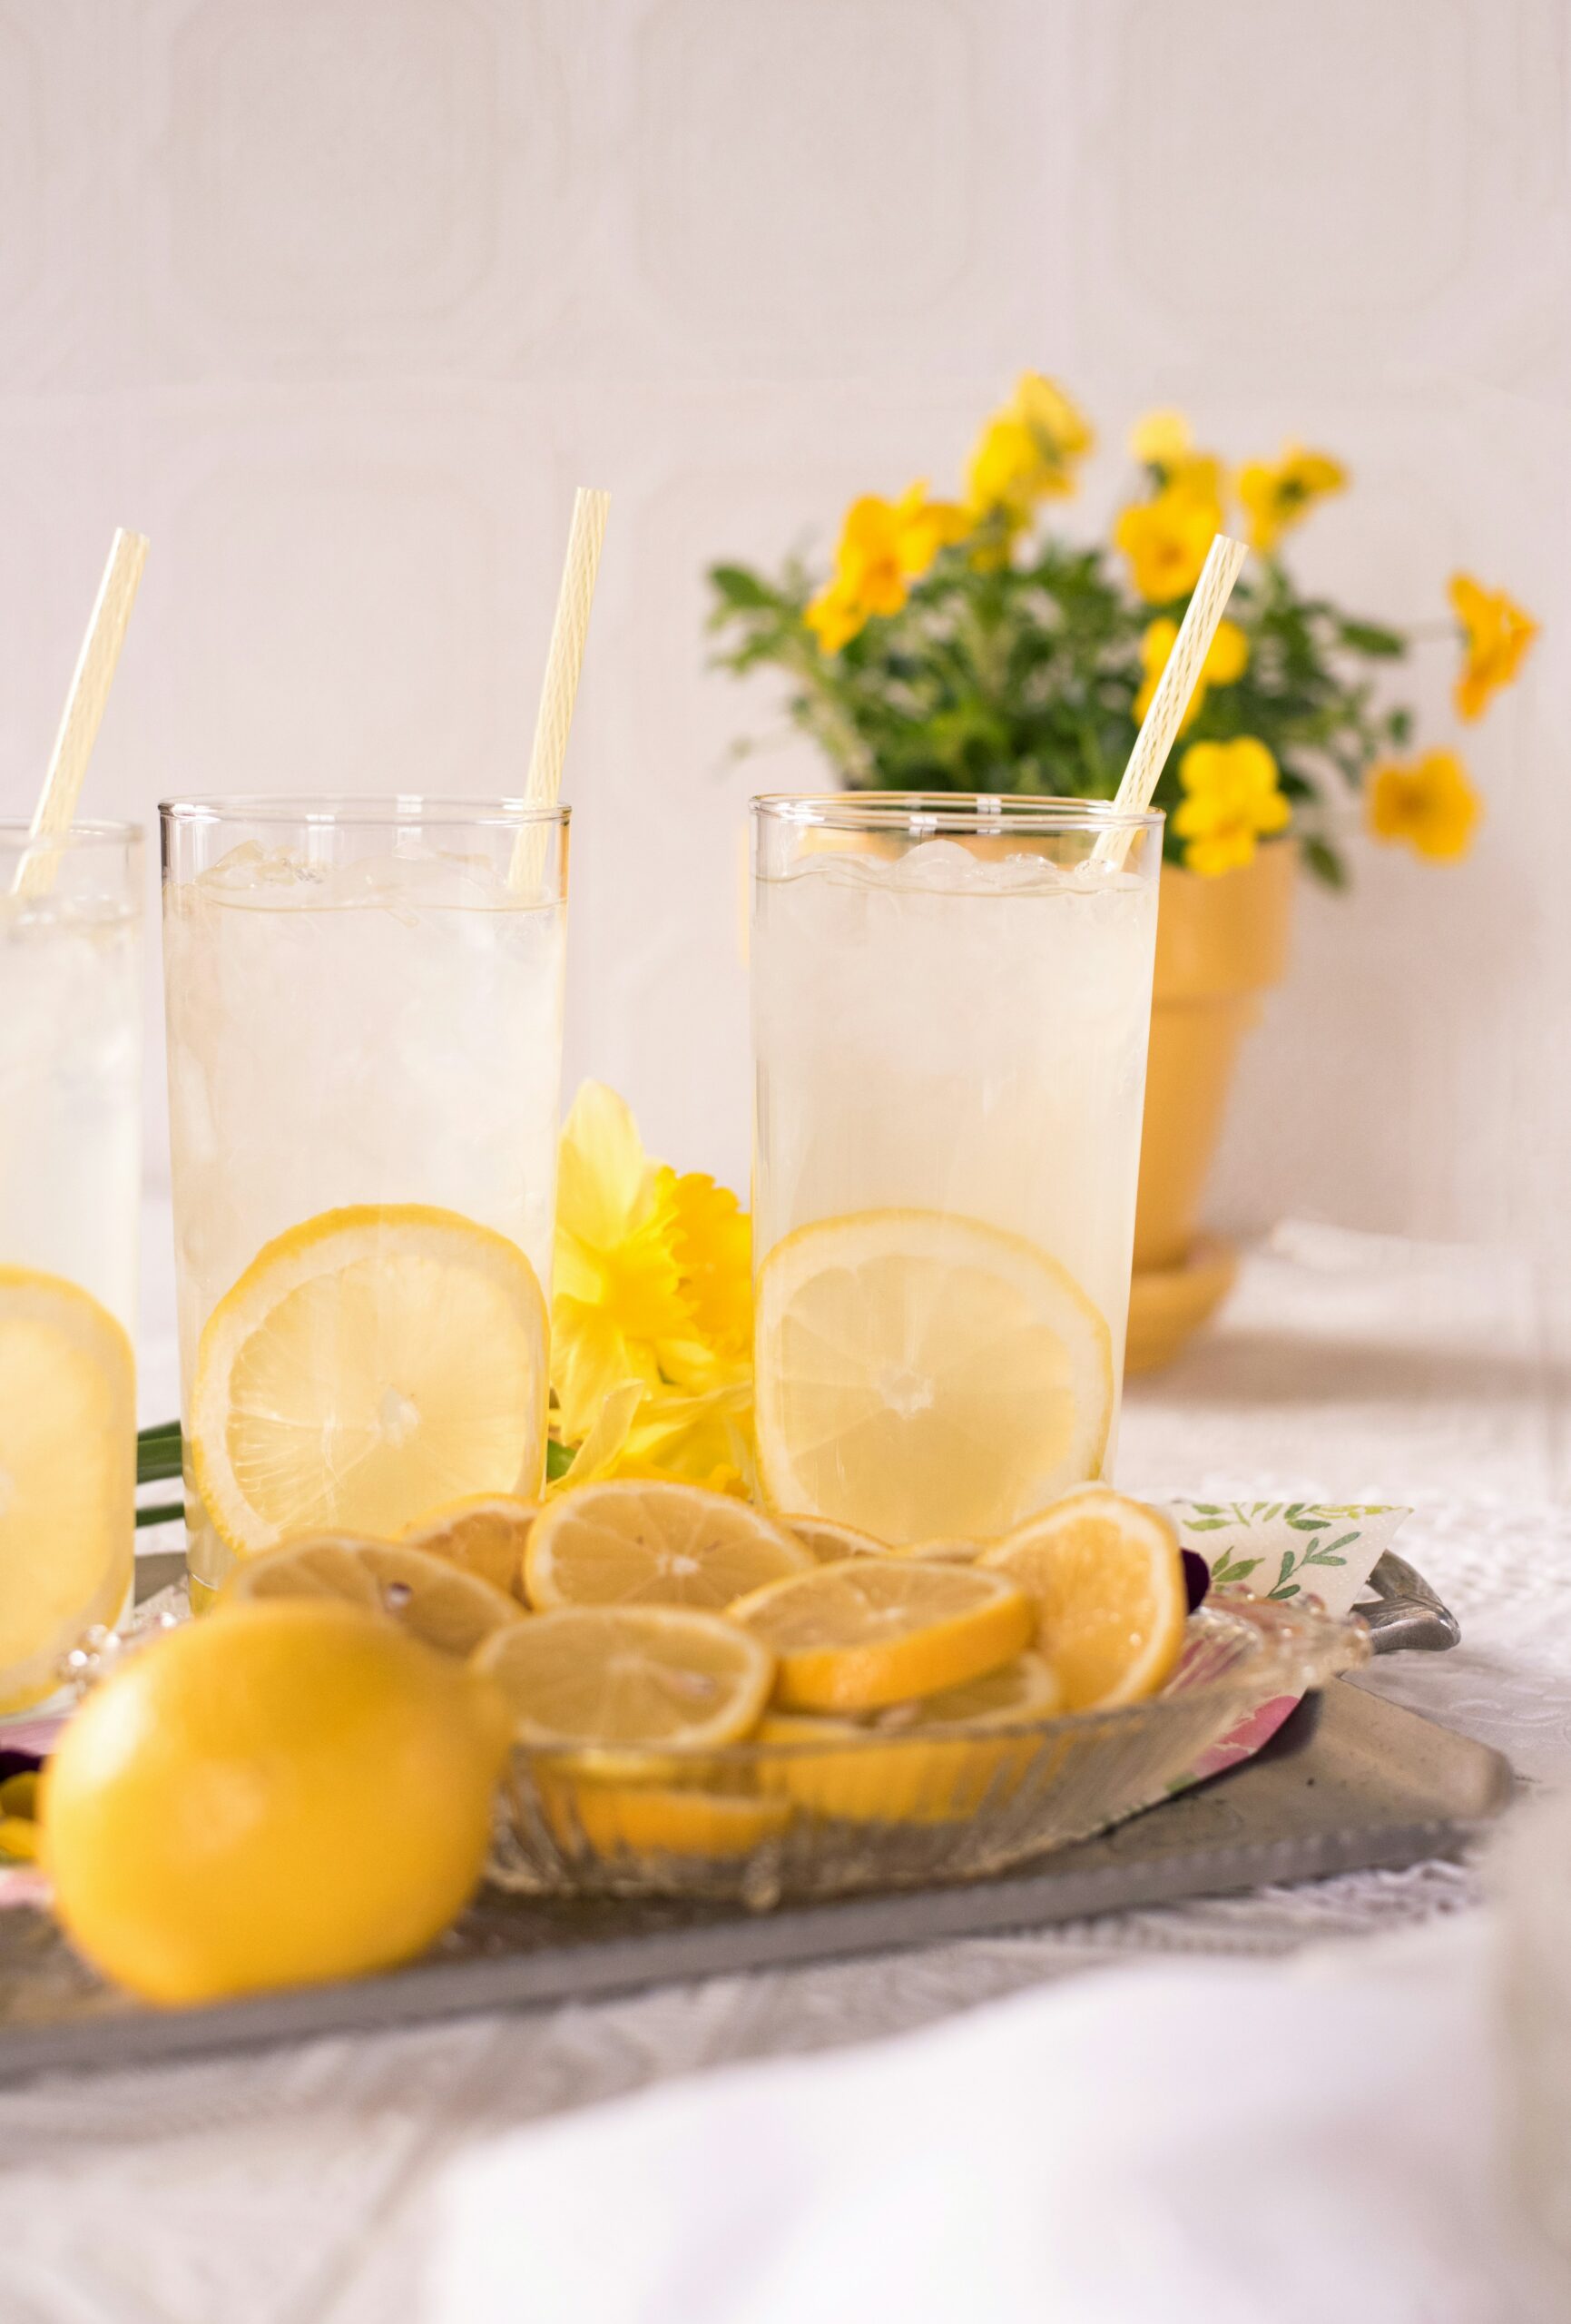 two glasses of lemonade on tray with lemons